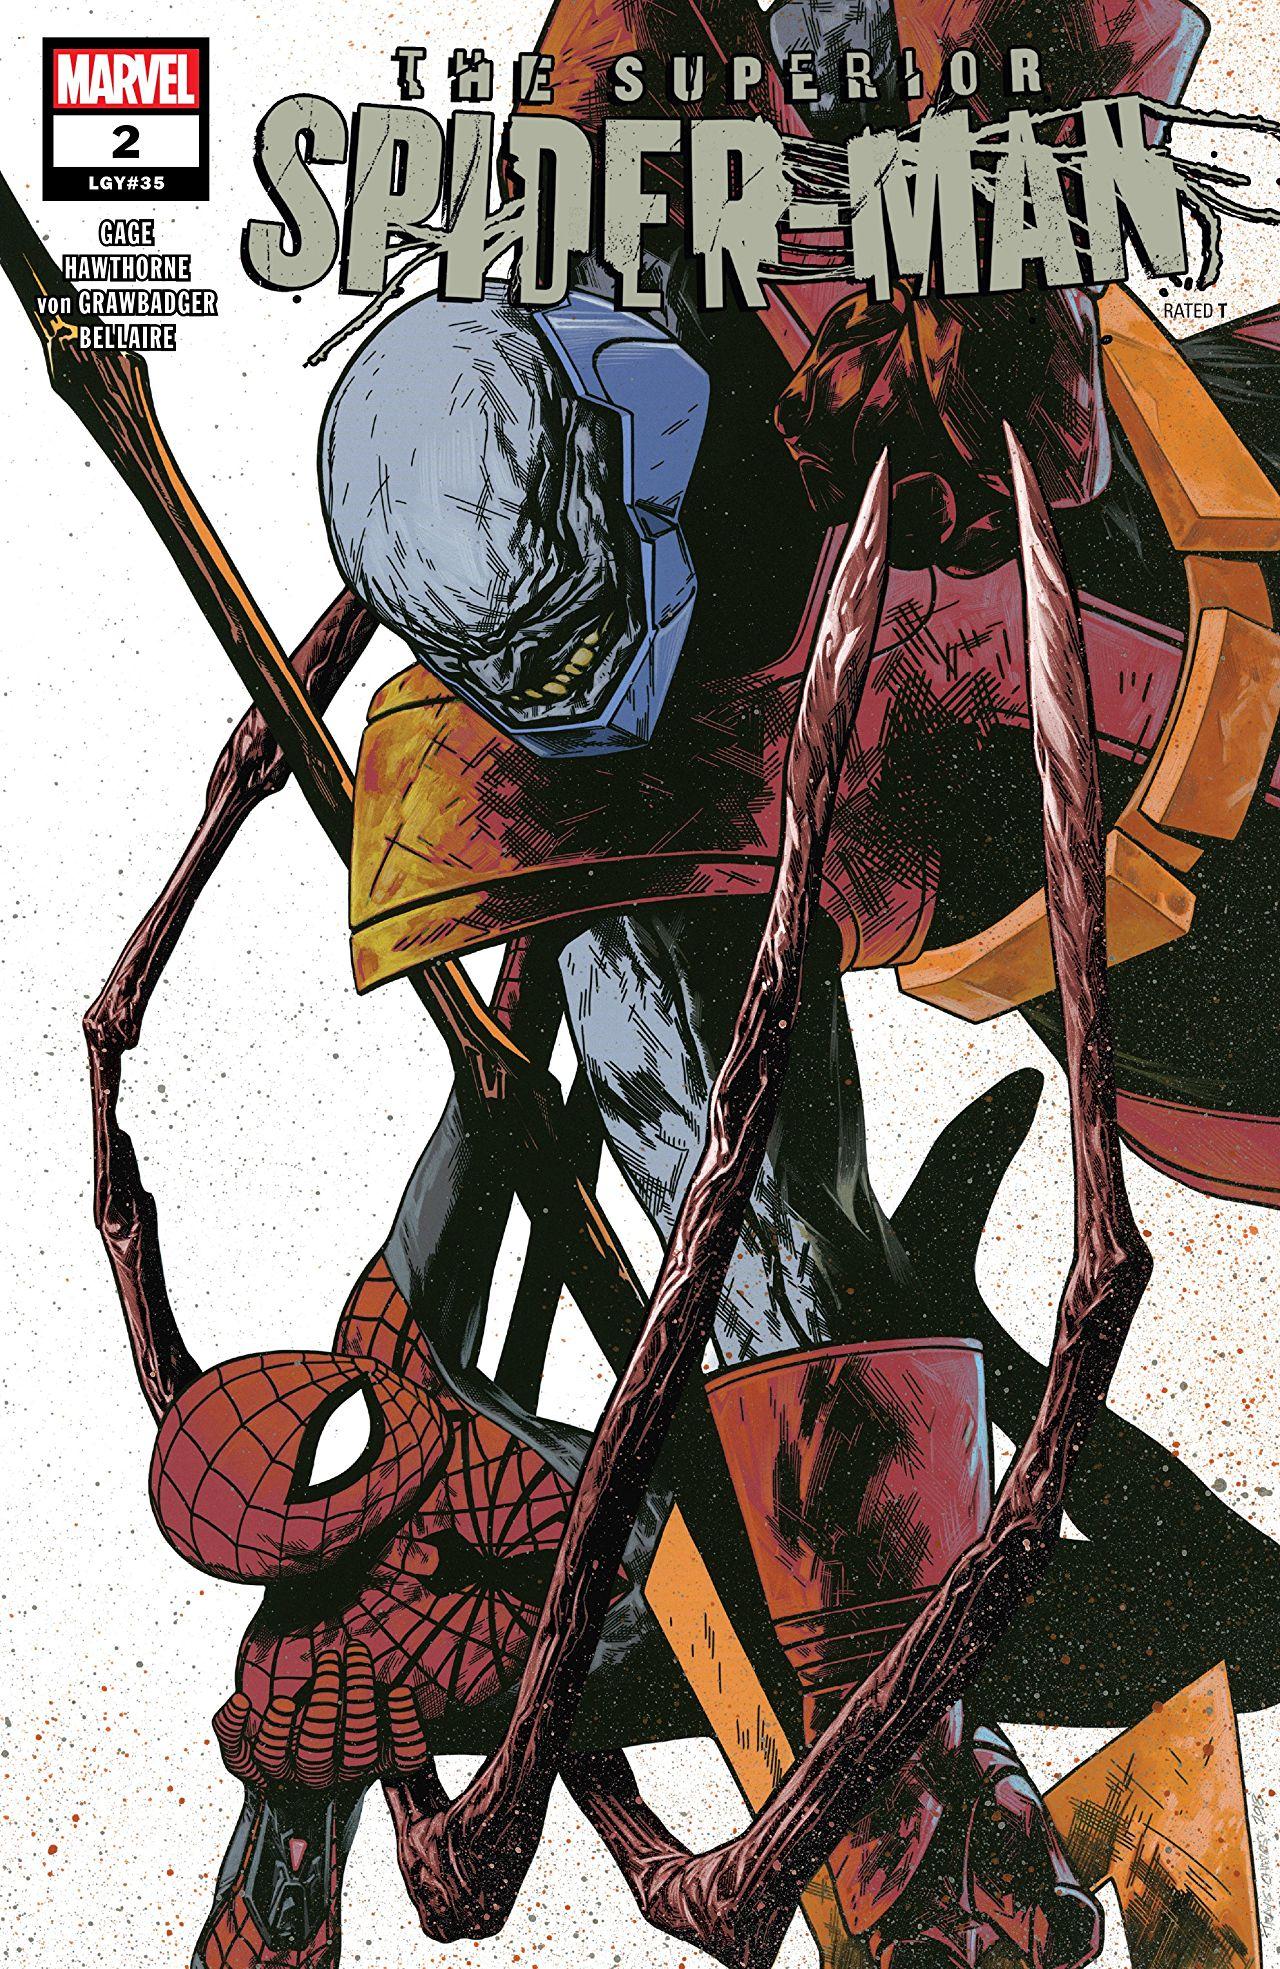 Superior Spider-Man Vol. 2 #2